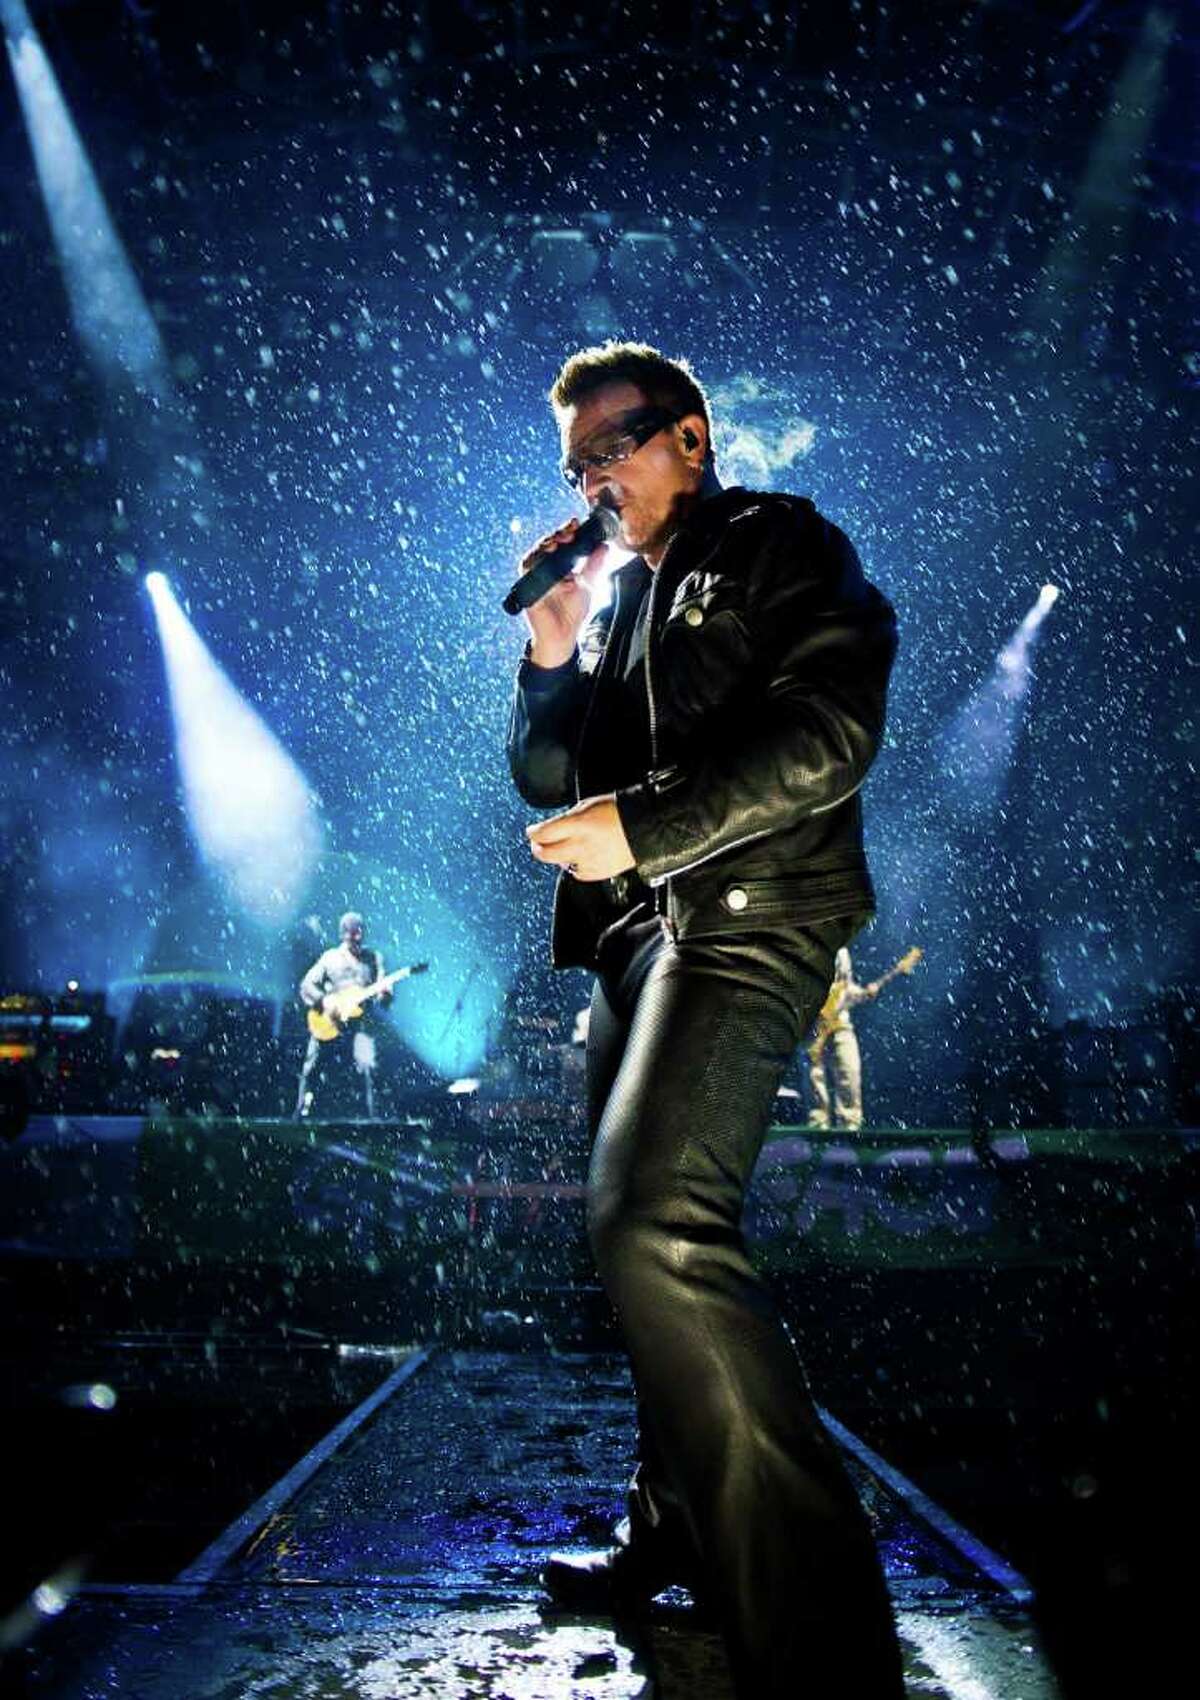 GLASTONBURY, ENGLAND - JUNE 24: Bono of U2 performs live on the pyramid stage during the Glastonbury Festival at Worthy Farm, Pilton on June 24, 2011 in Glastonbury, England. (Photo by Ian Gavan/Getty Images)